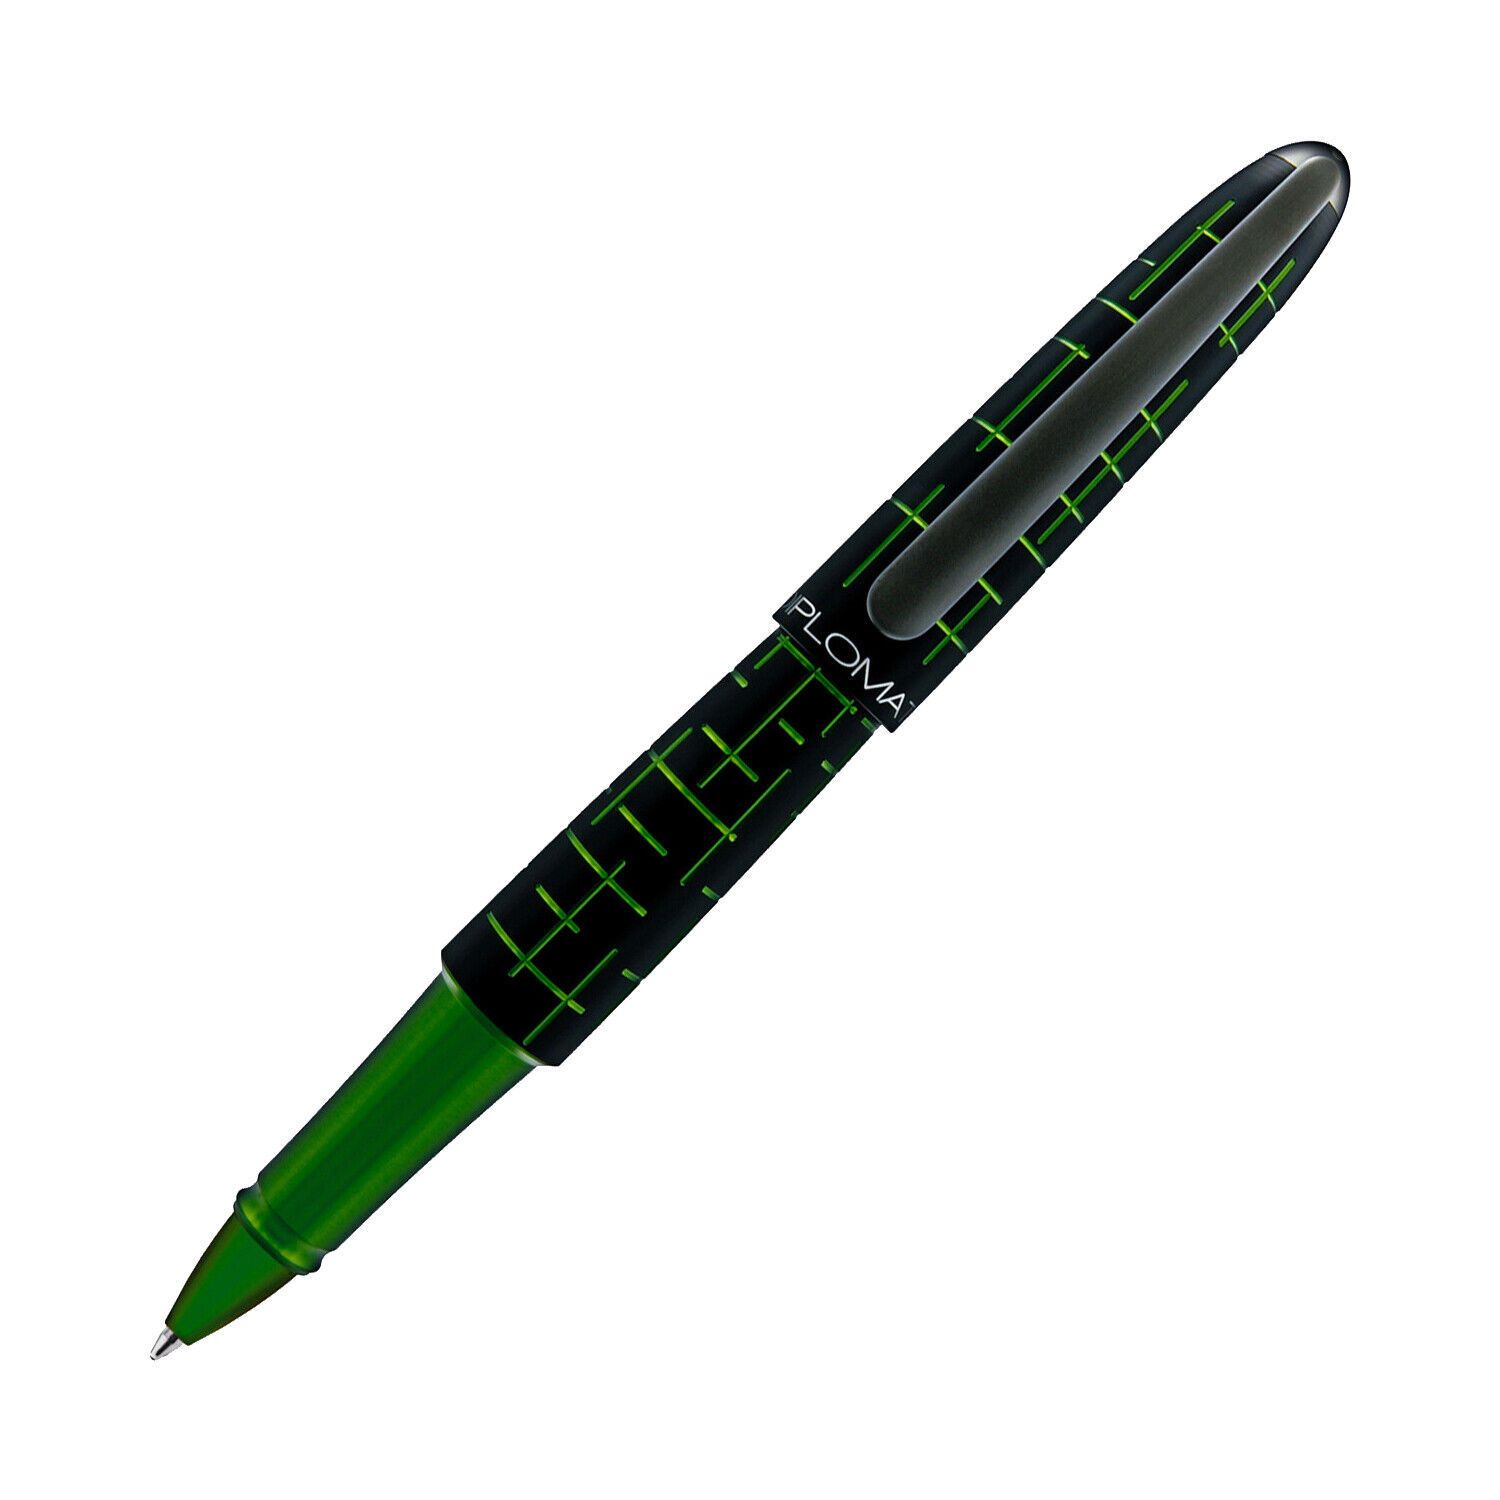 Diplomat Elox Matrix Rollerball Pen in Ring BlackGreen - NEW in Original Box